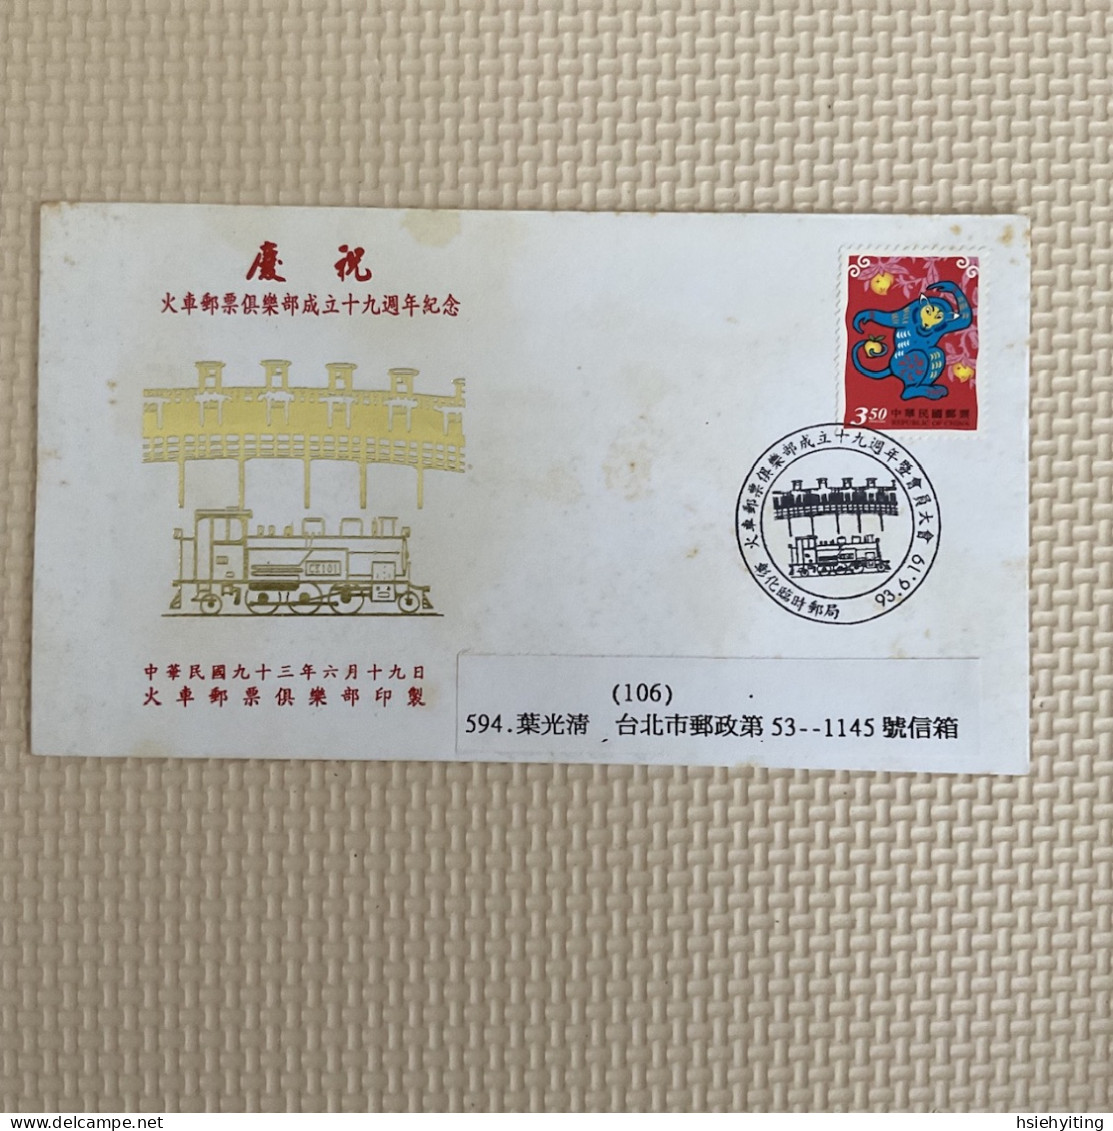 Taiwanese Train Postmarks - Eisenbahnen